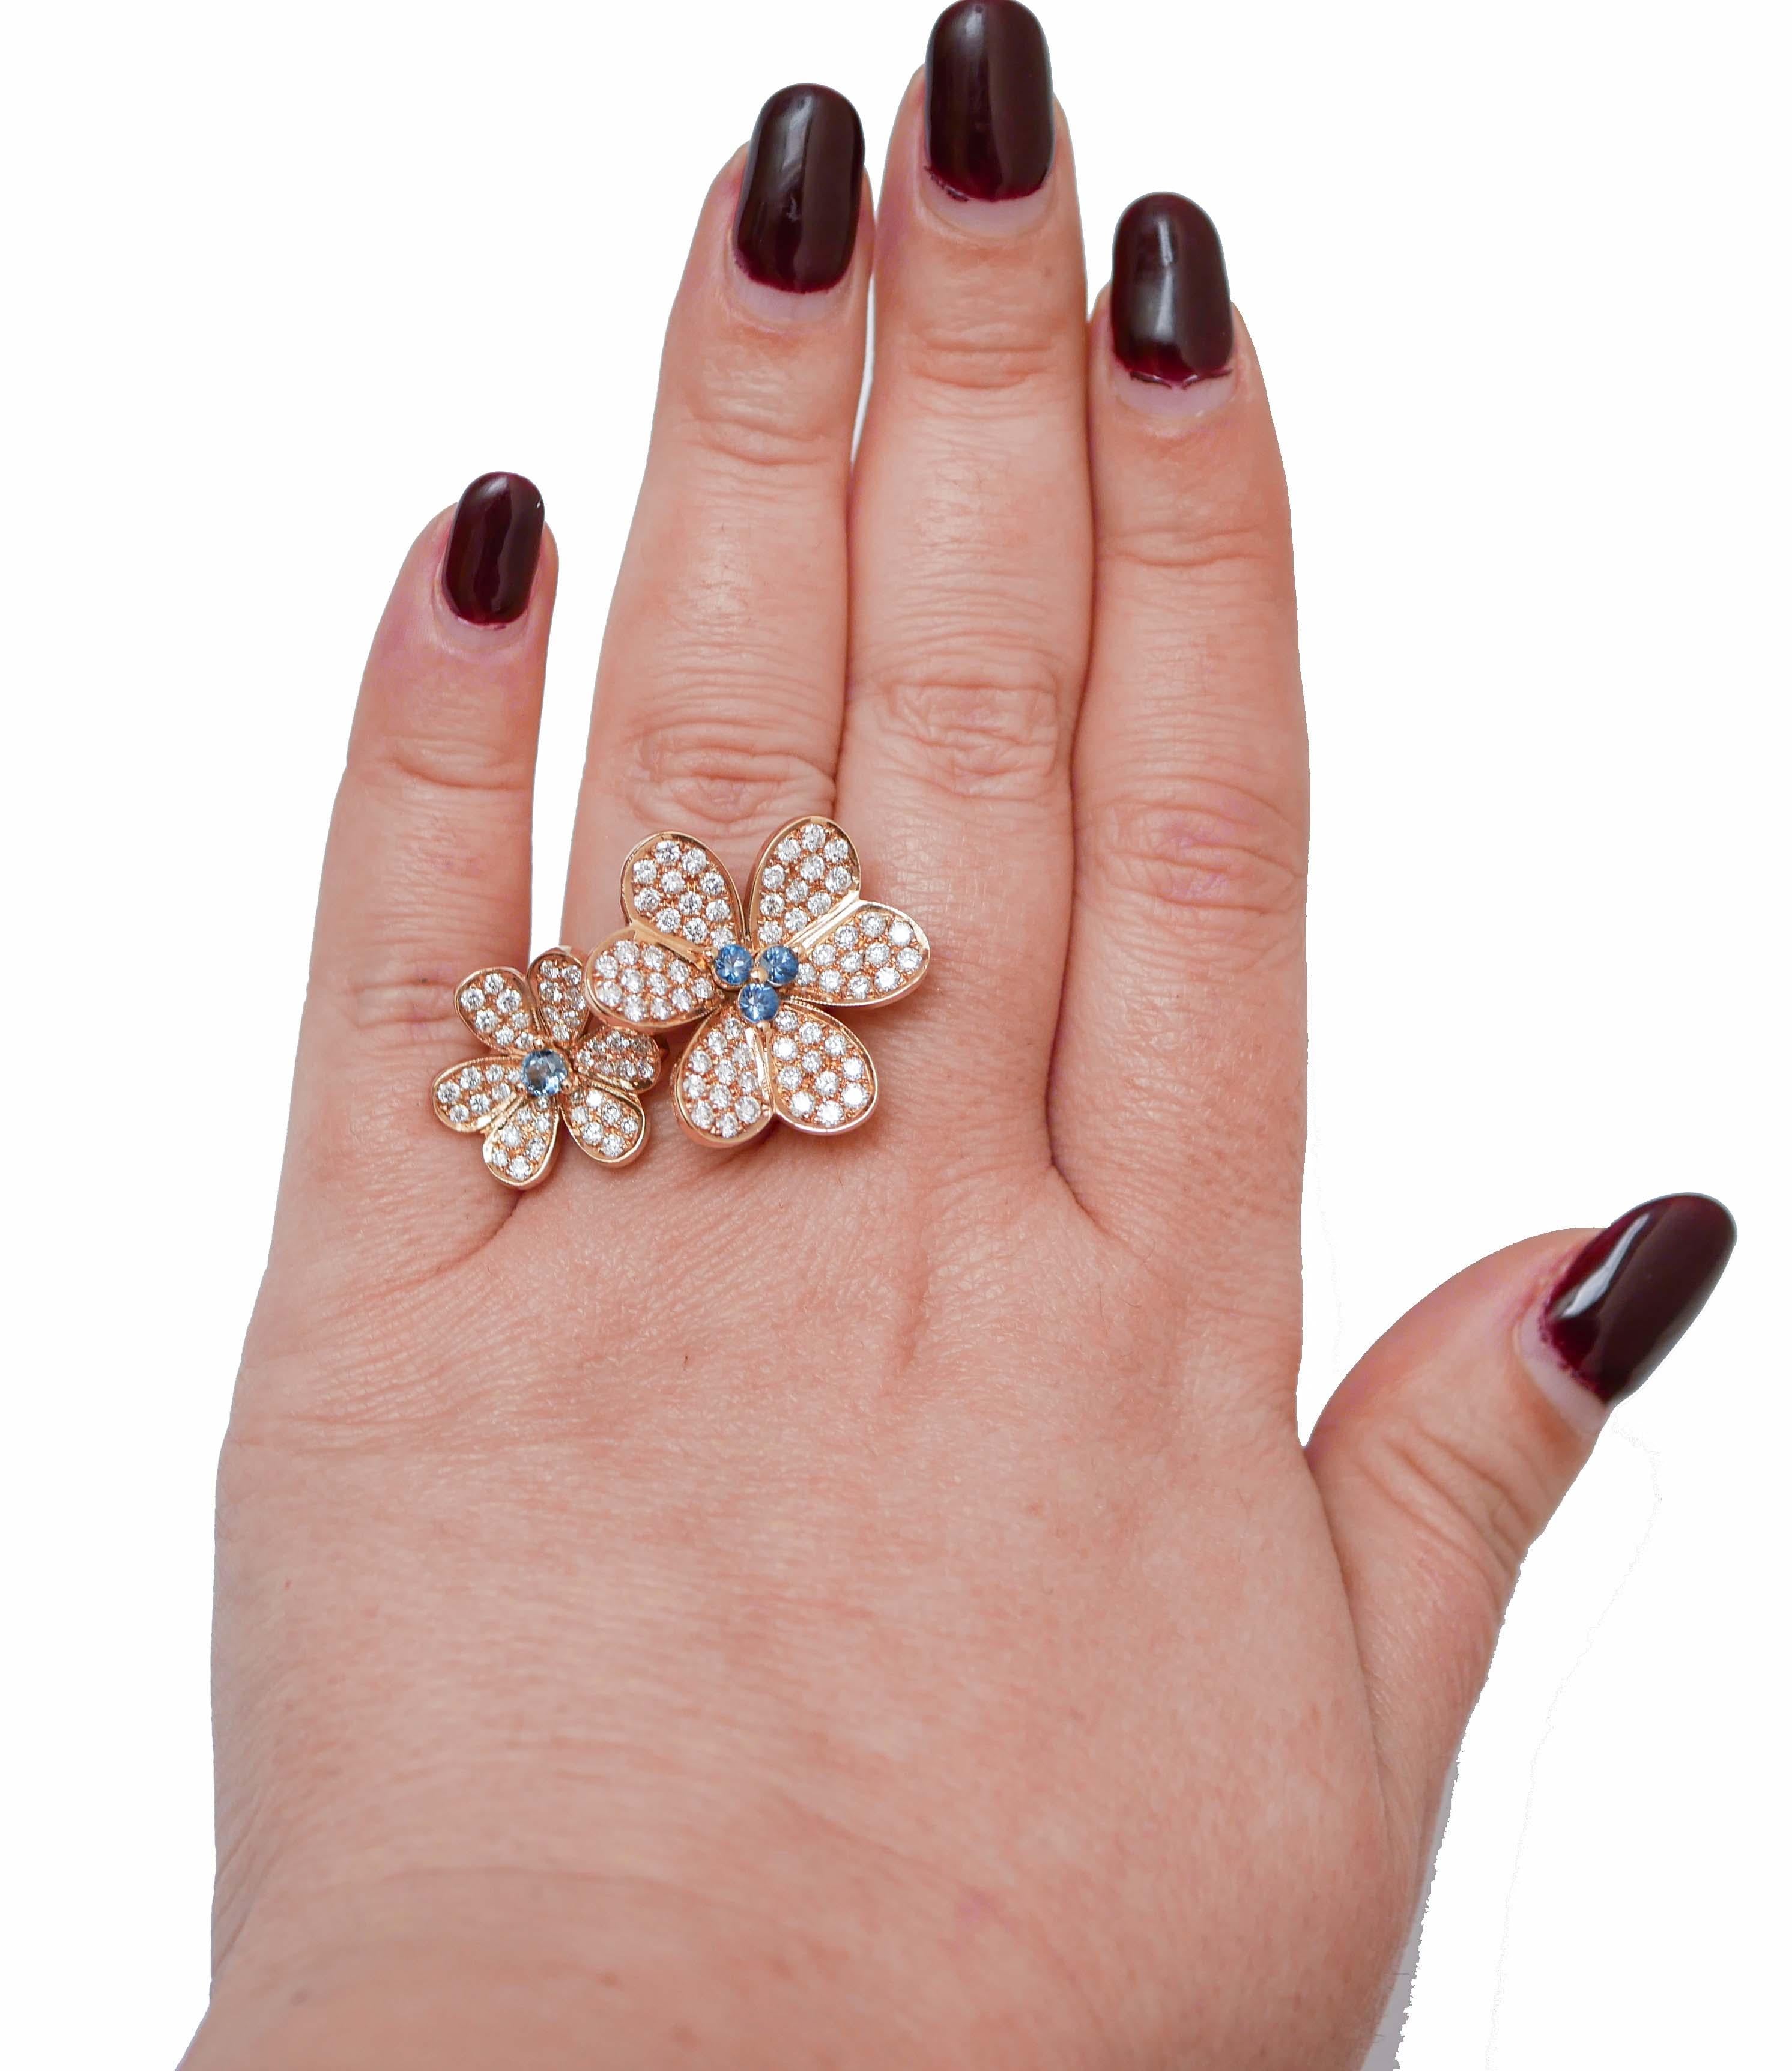 Mixed Cut Sapphires, Diamonds, 18 Karat Rose Gold Flowers Ring. For Sale